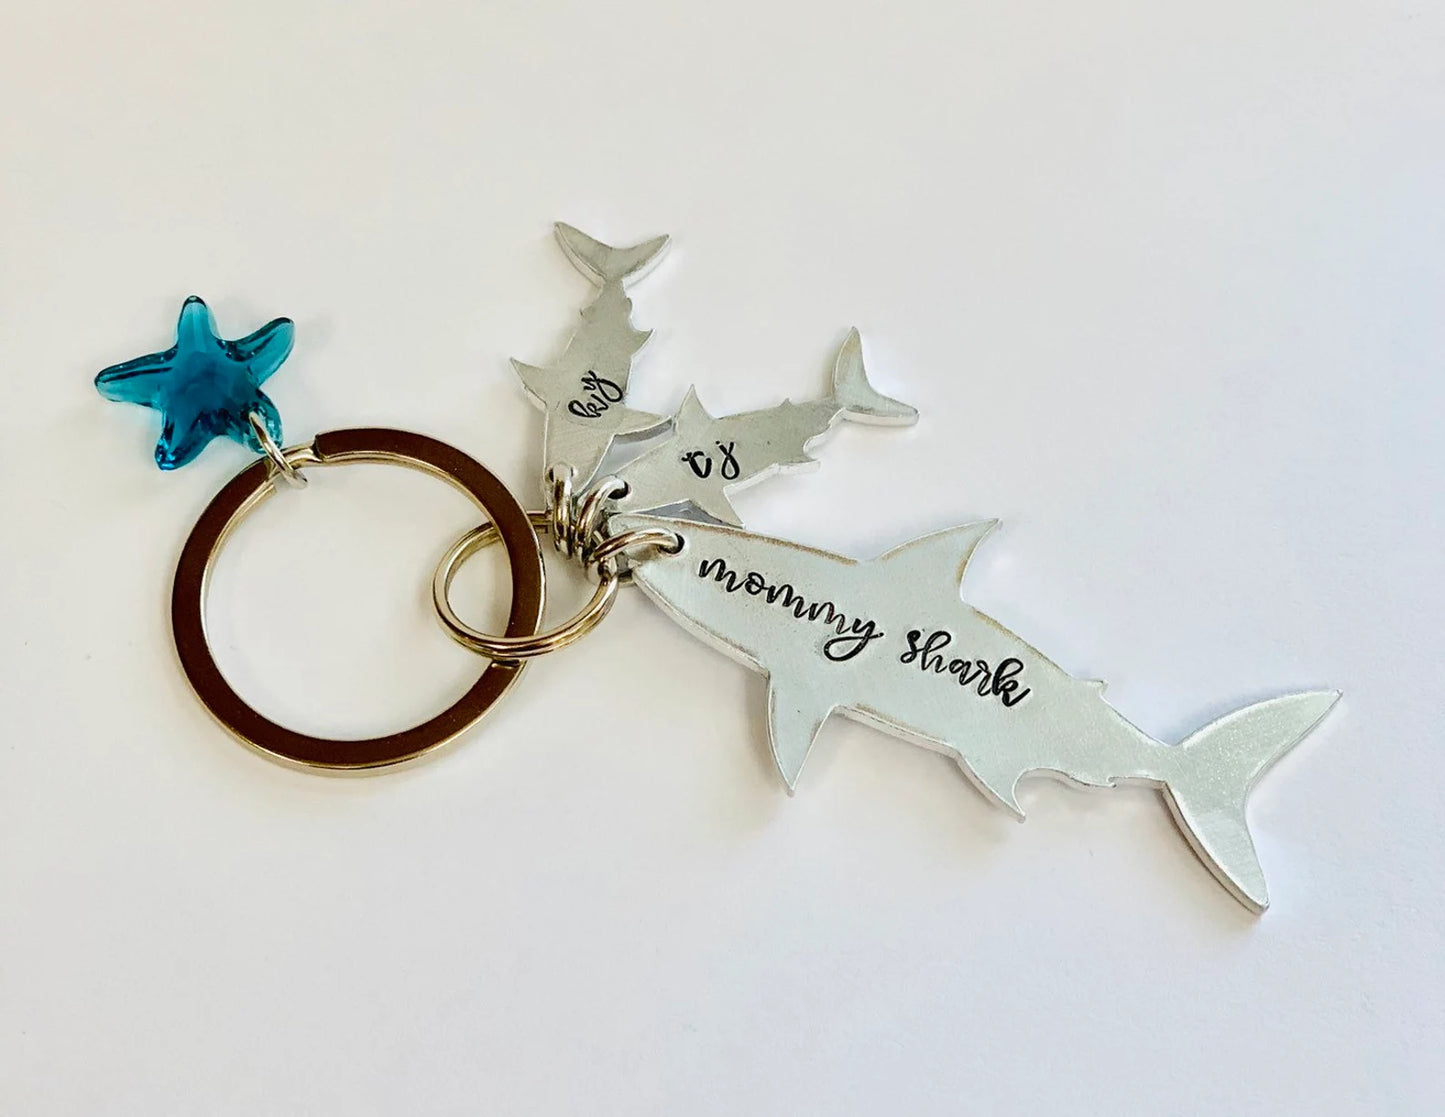 Daddy shark doo doo doo baby shark key ring keychain daddy shark mommy shark hand stamped sharks personalized shark key ring